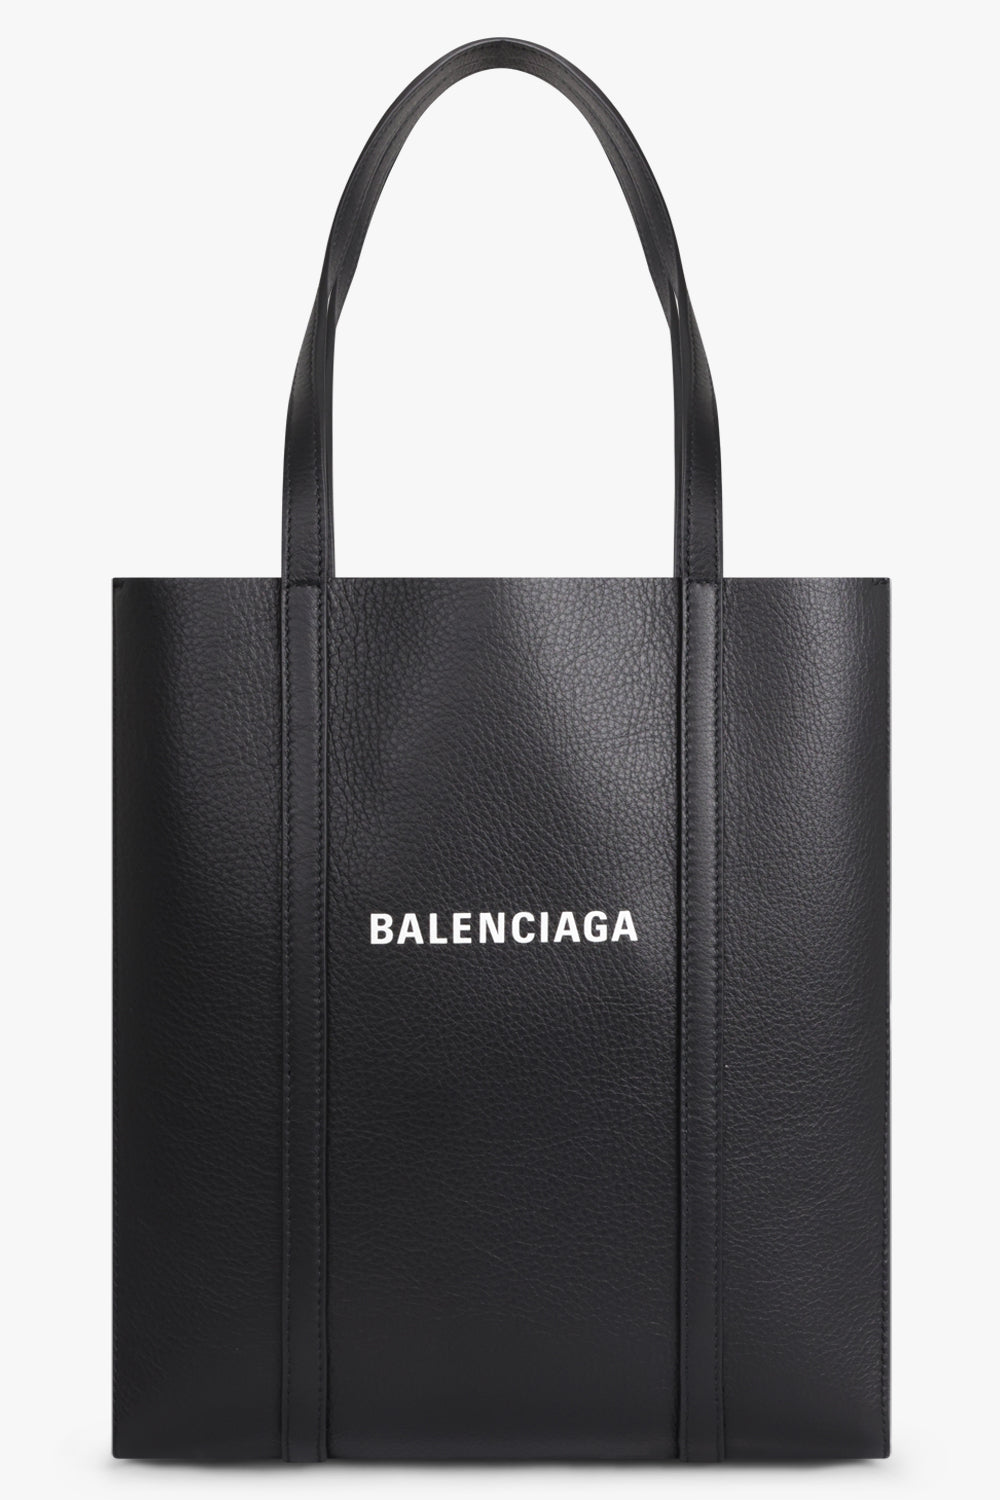 BALENCIAGA BAGS BLACK EVERYDAY XS TOTE | BLACK